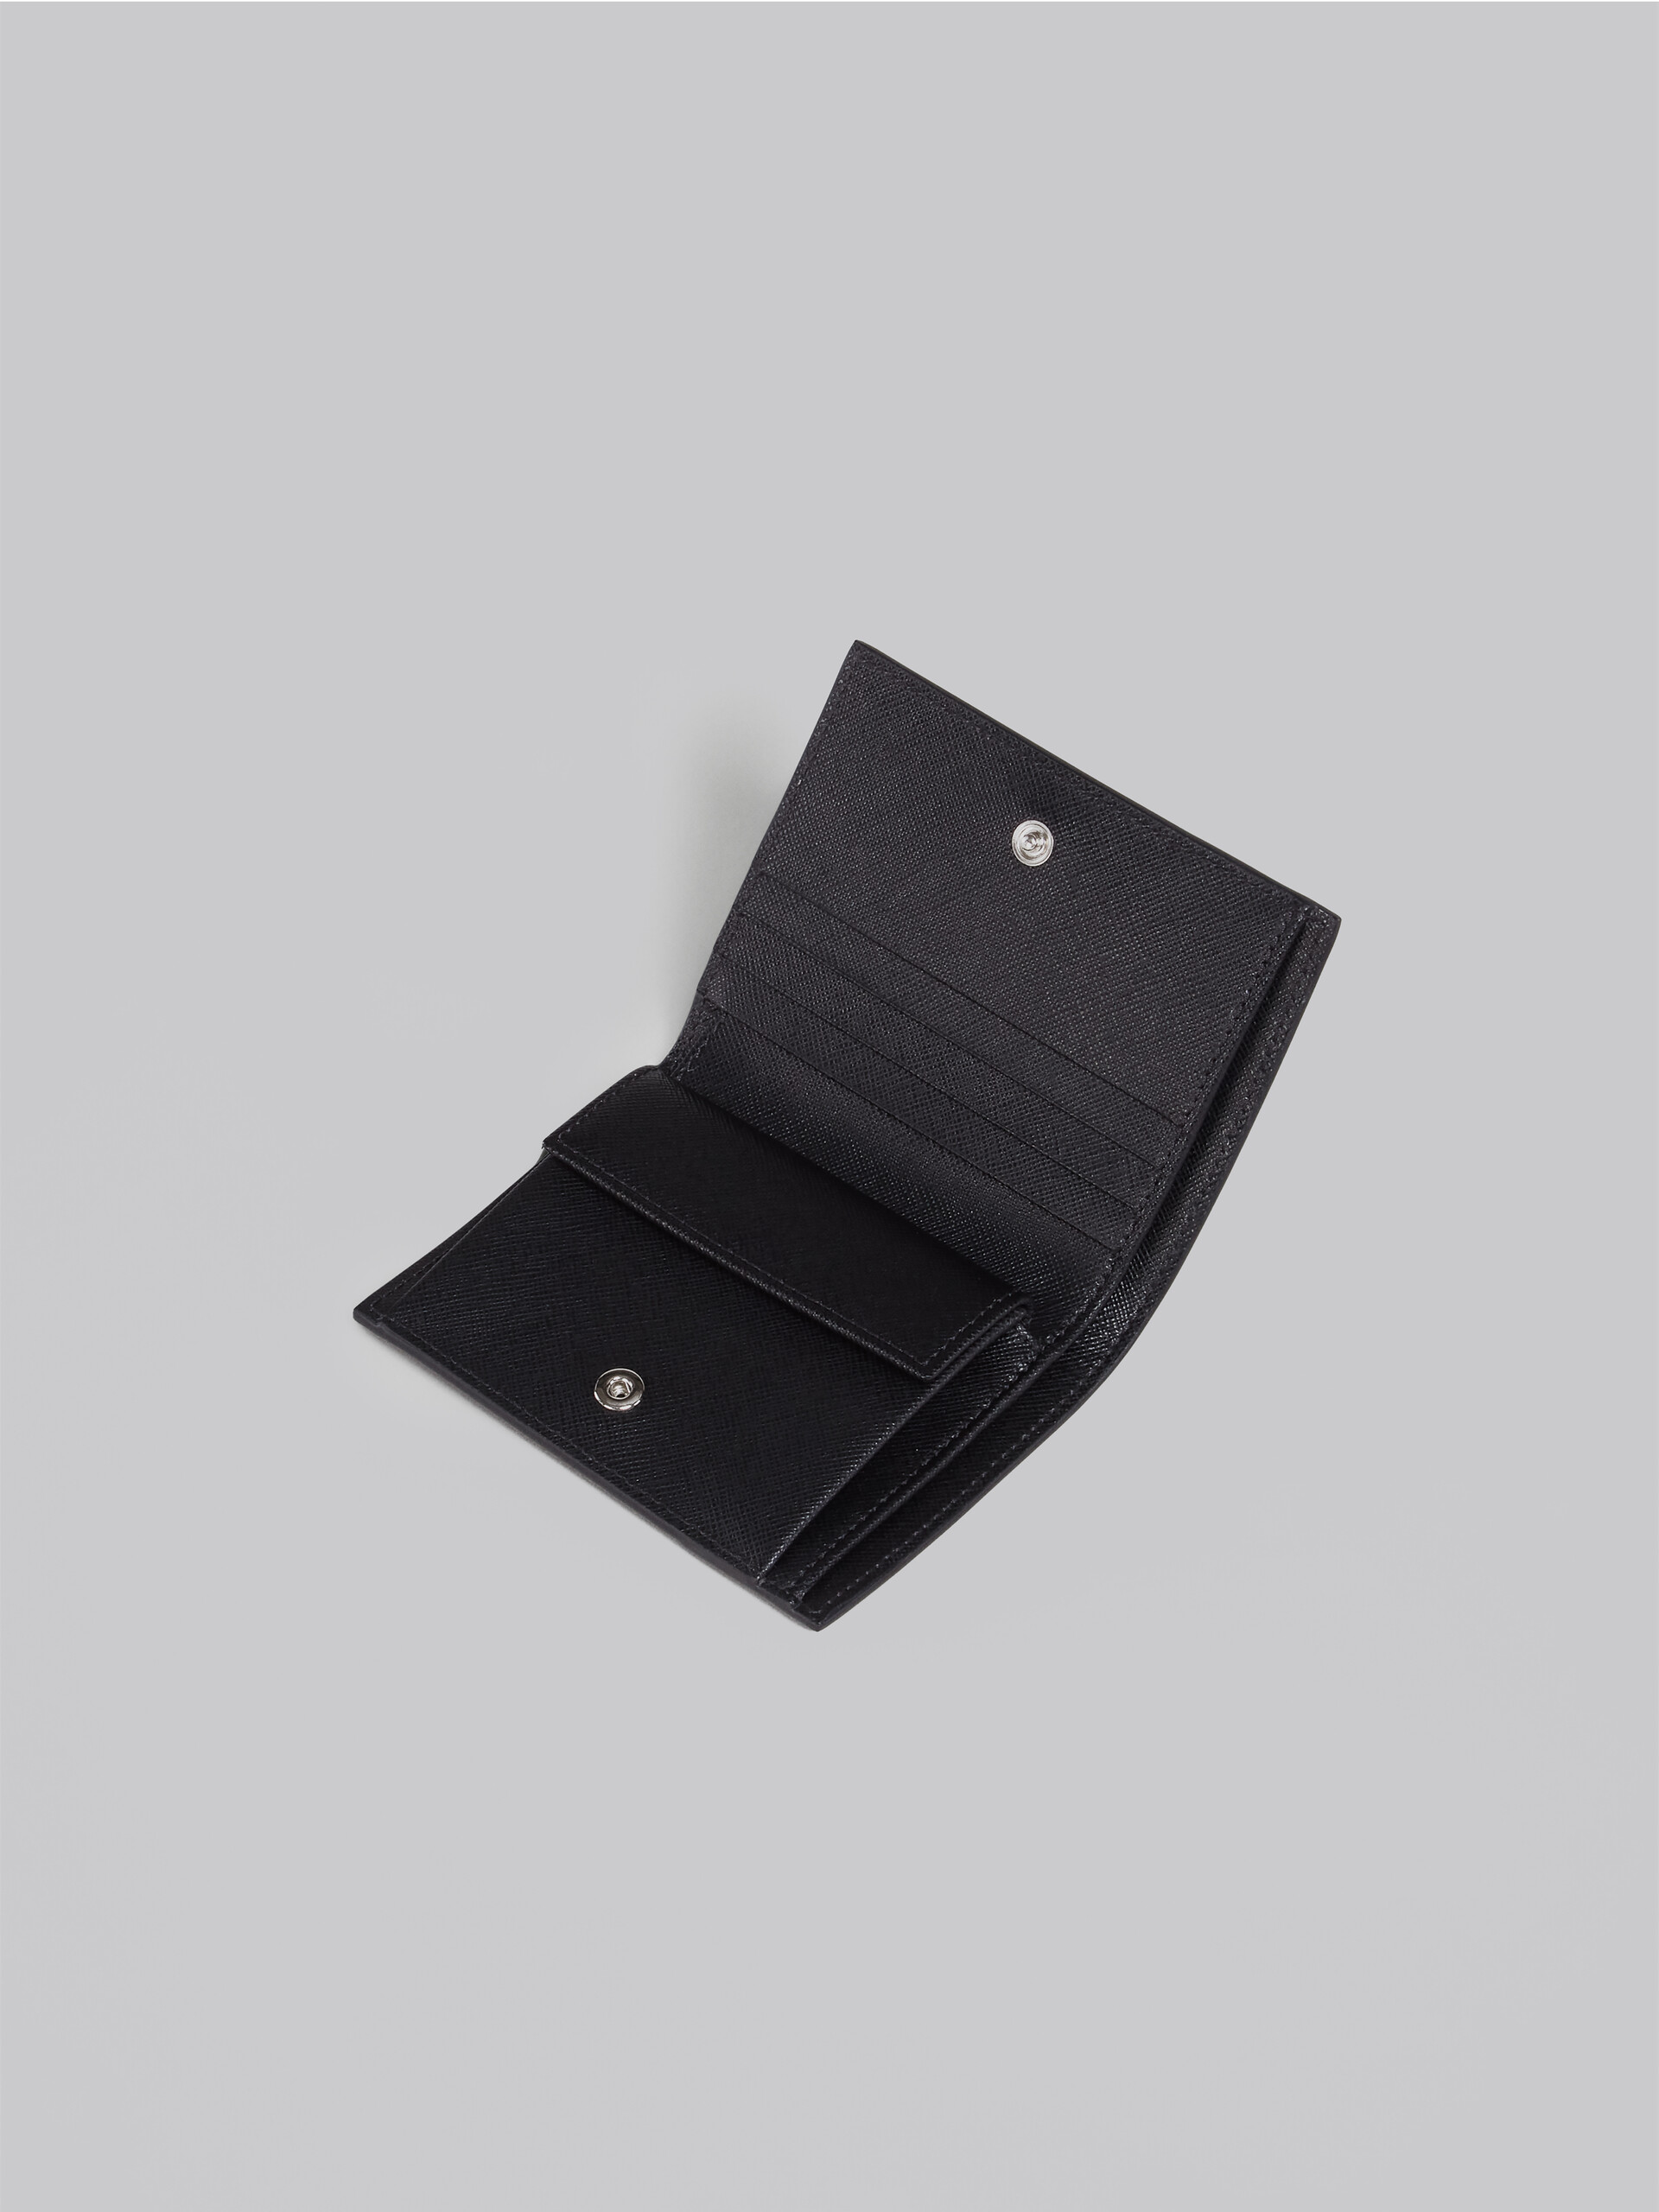 Black saffiano and calf bi-fold wallet - Wallets - Image 4